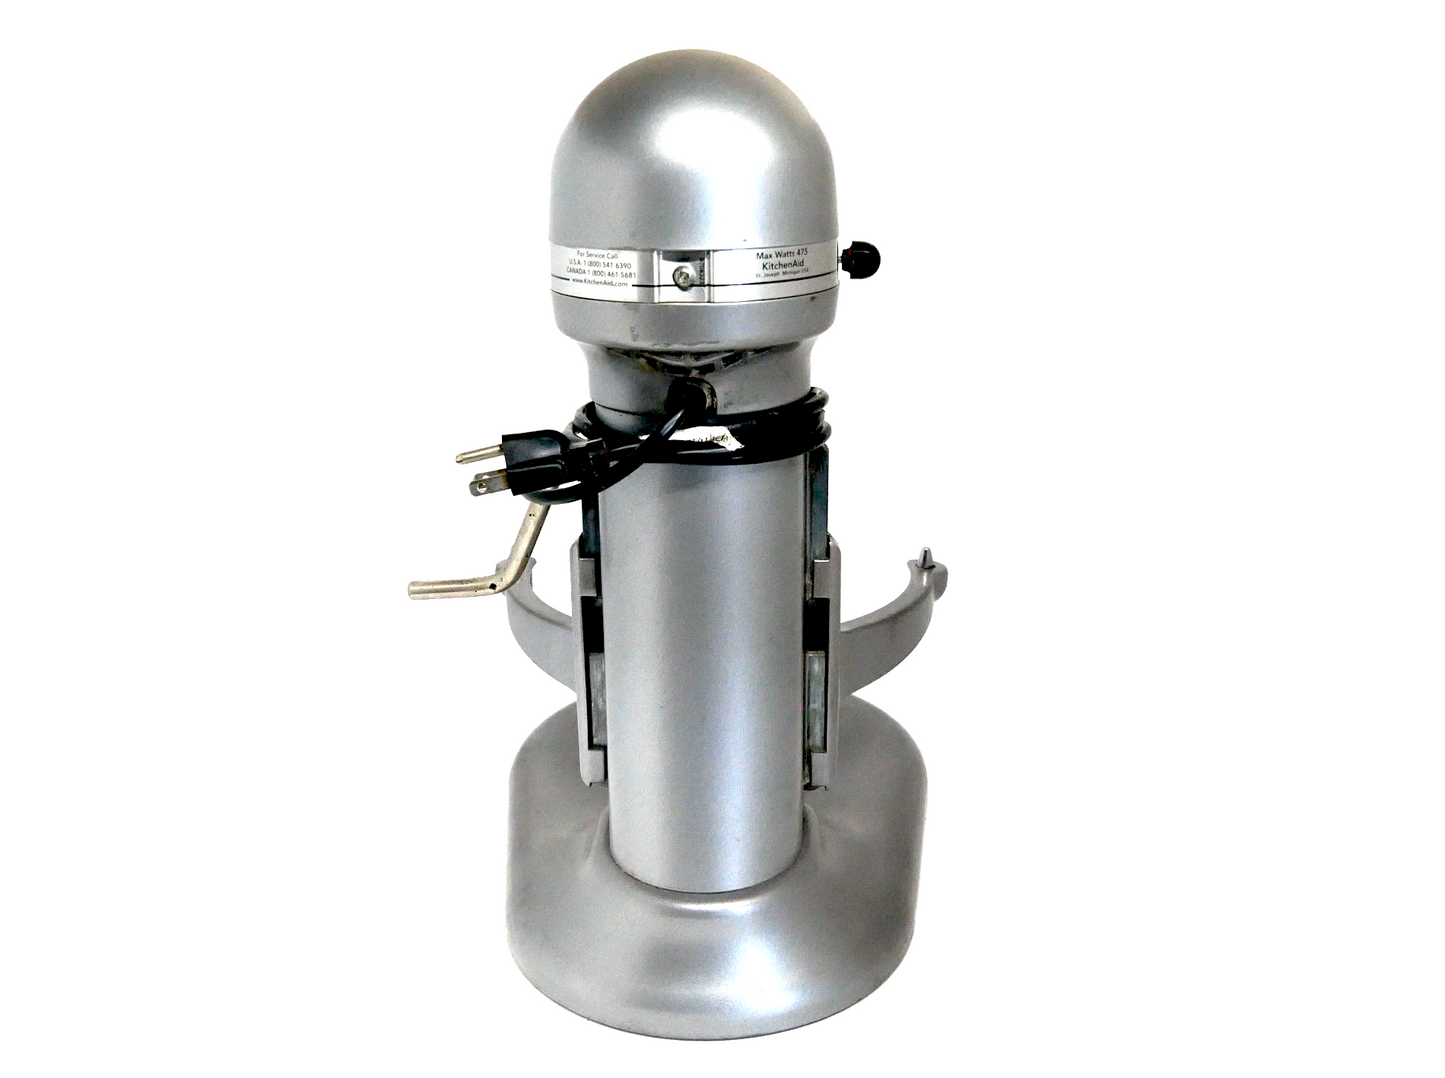 KitchenAid Professional 5 Plus 5 Quart Bowl-Lift Stand Mixer with